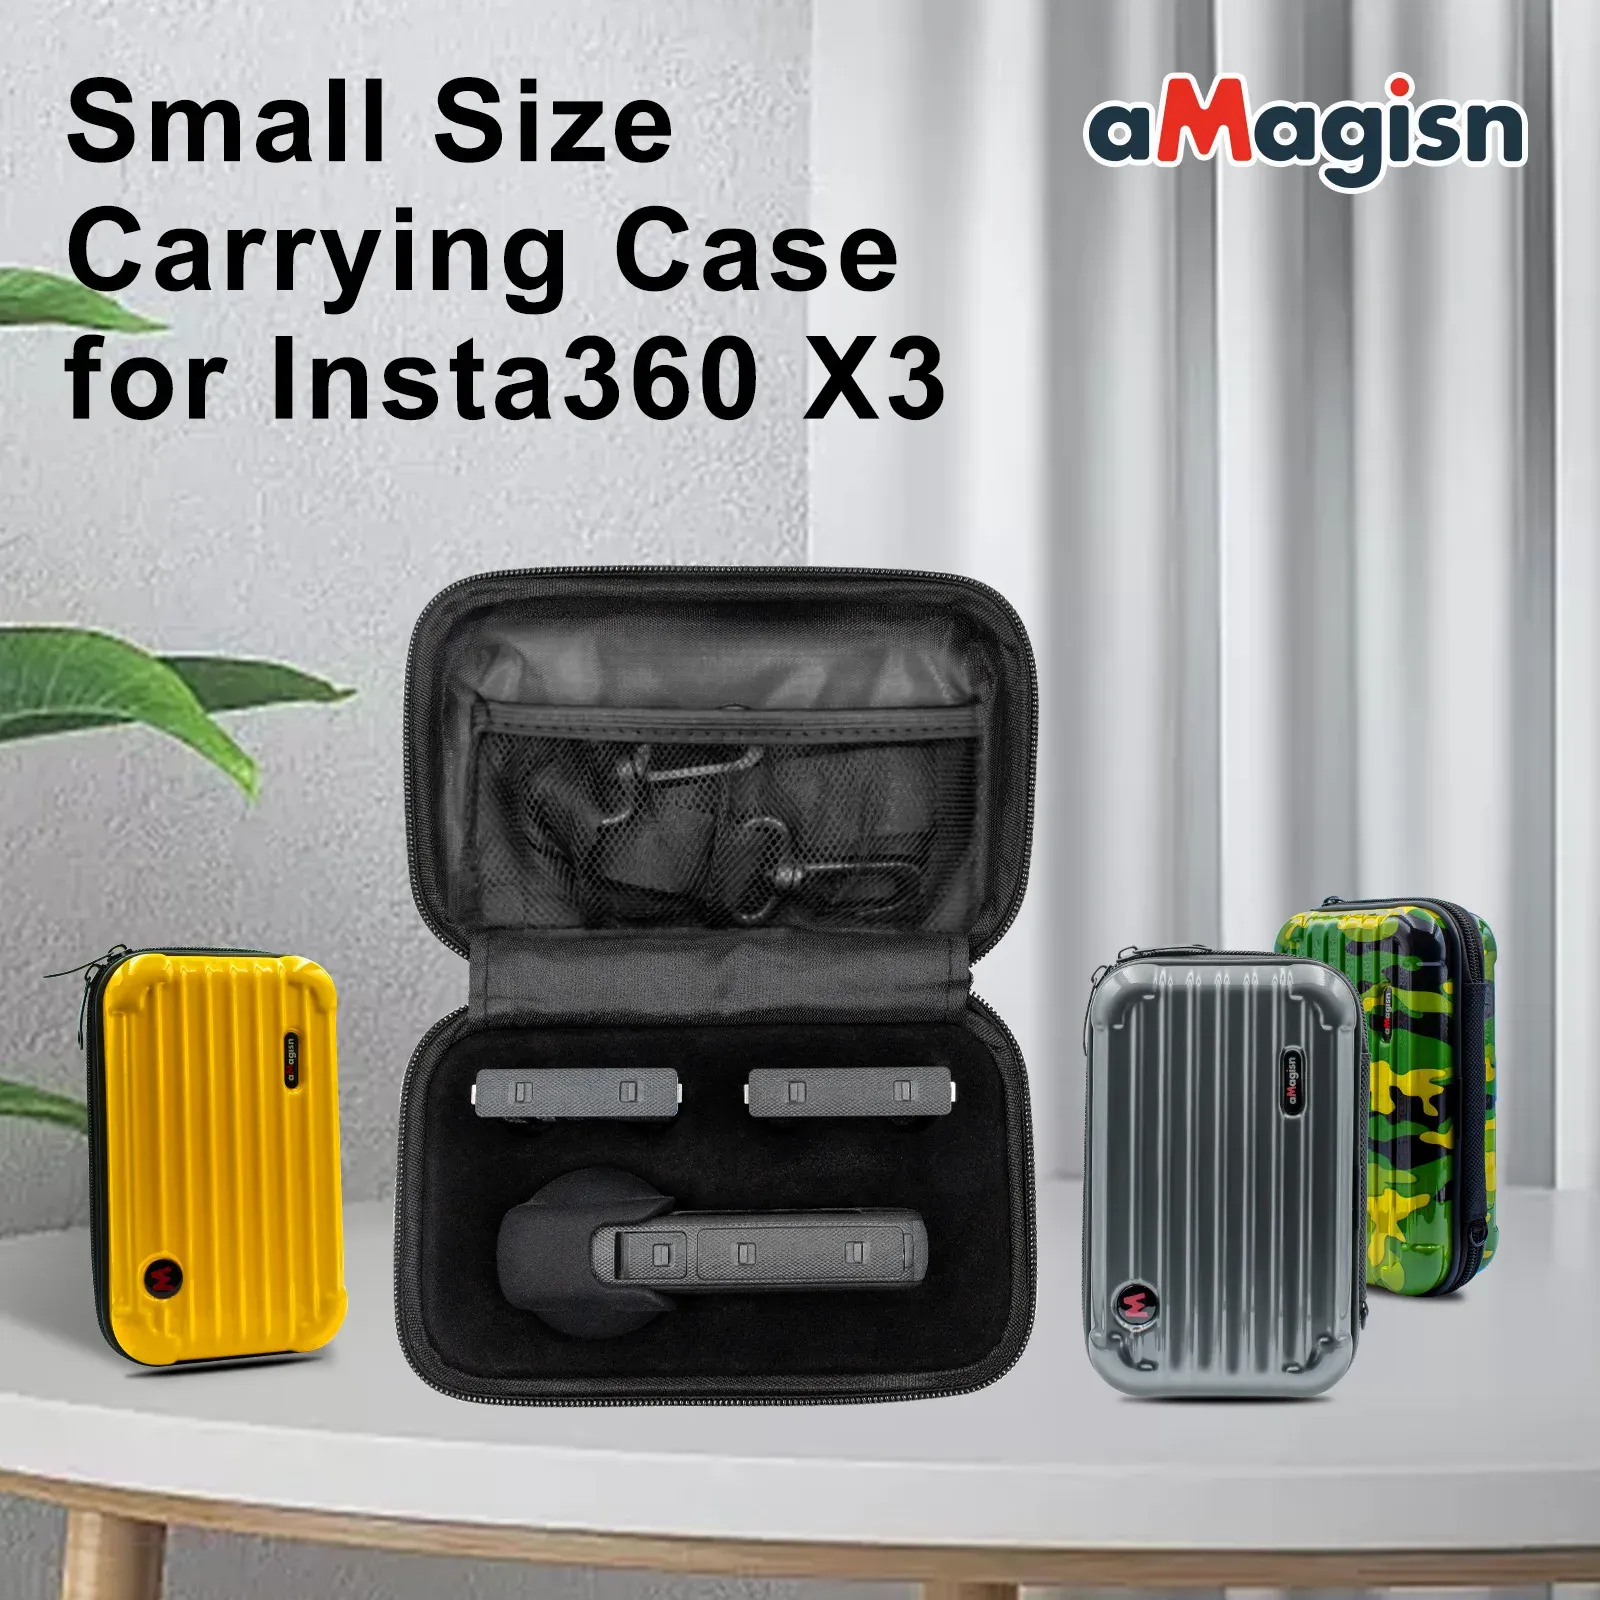 Insta360 x3スモールサイズストレージバッグ360x3保護アクセサリーポータブルキャリングケースアクションスポーツカメラハードケースバッグのアクセサリ